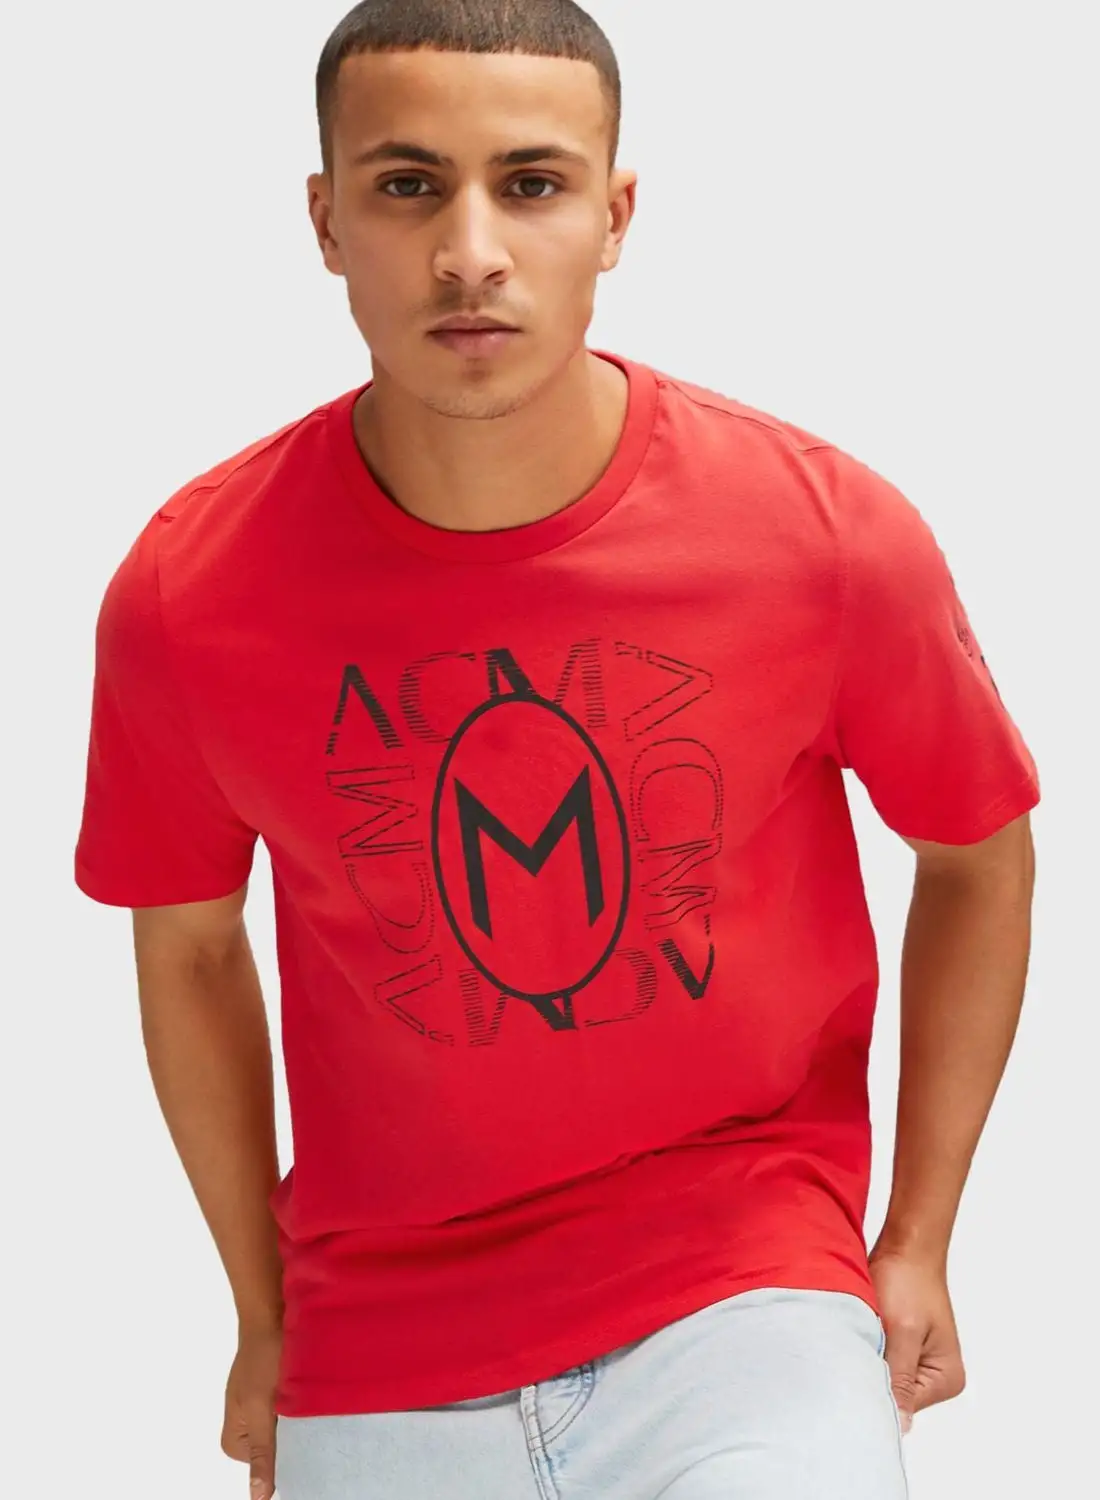 PUMA Ac Milan Football Core Graphic T-Shirt